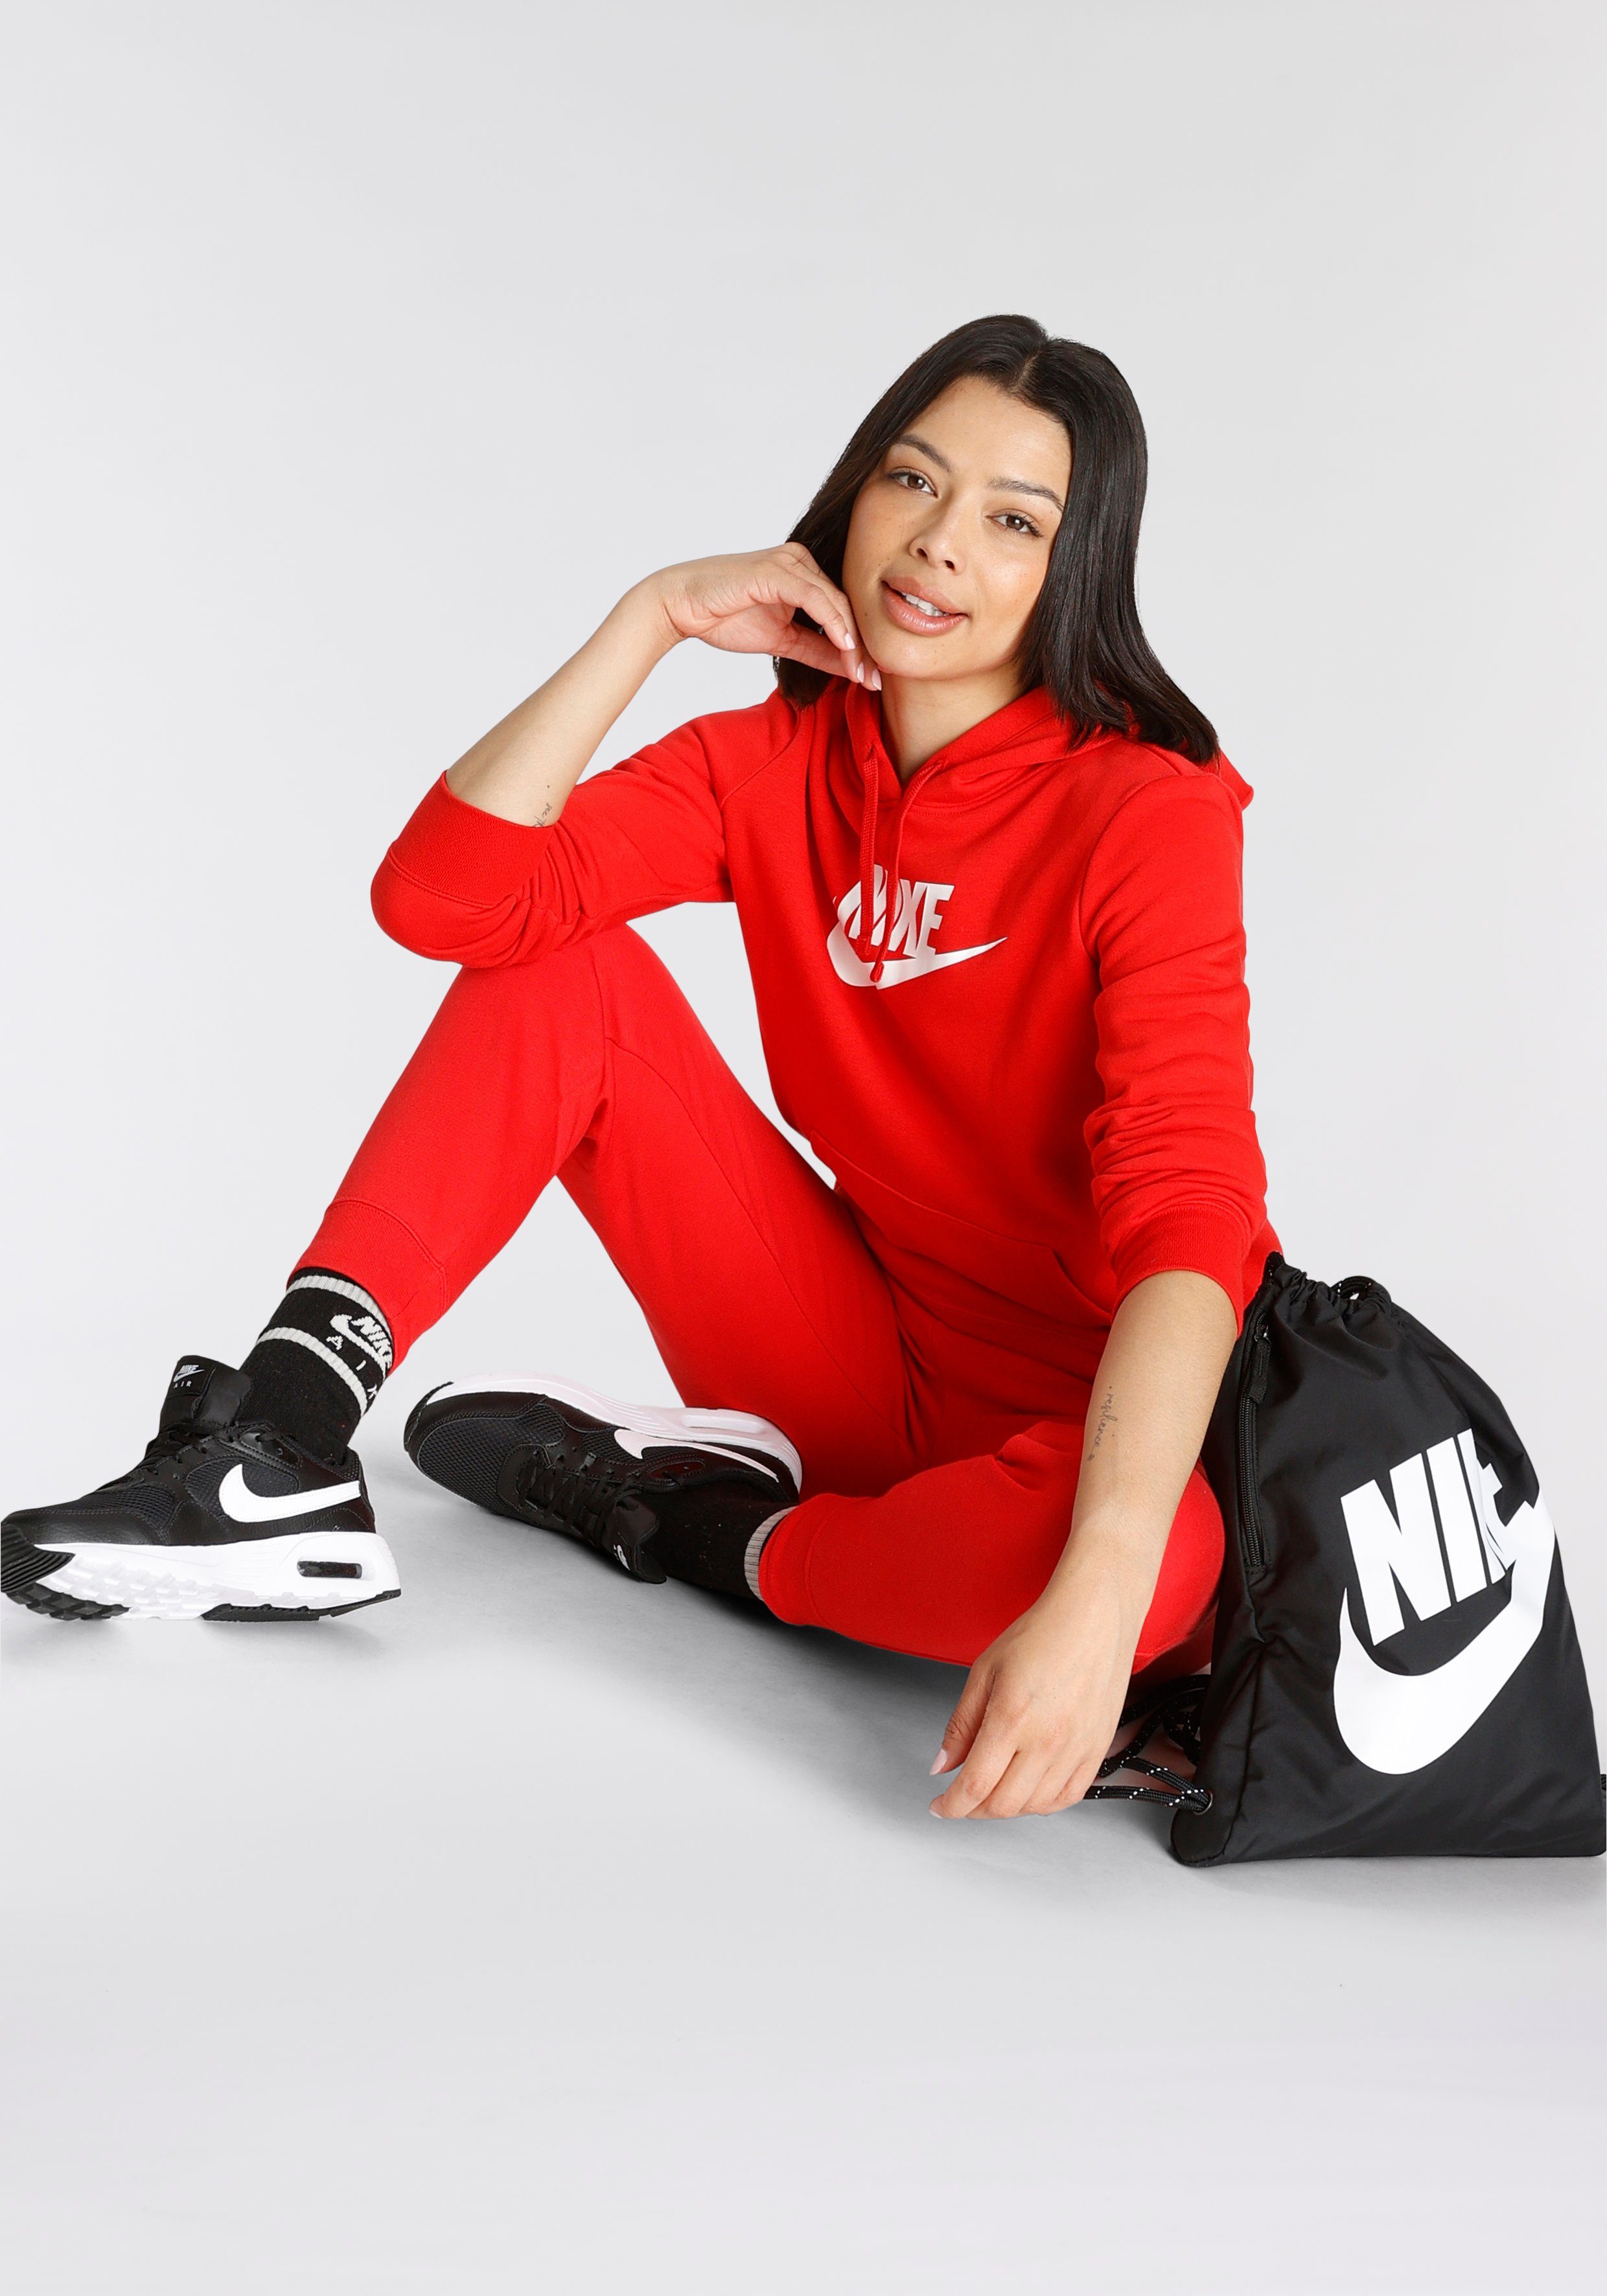 Nike Damen Sportbekleidung online kaufen | OTTO